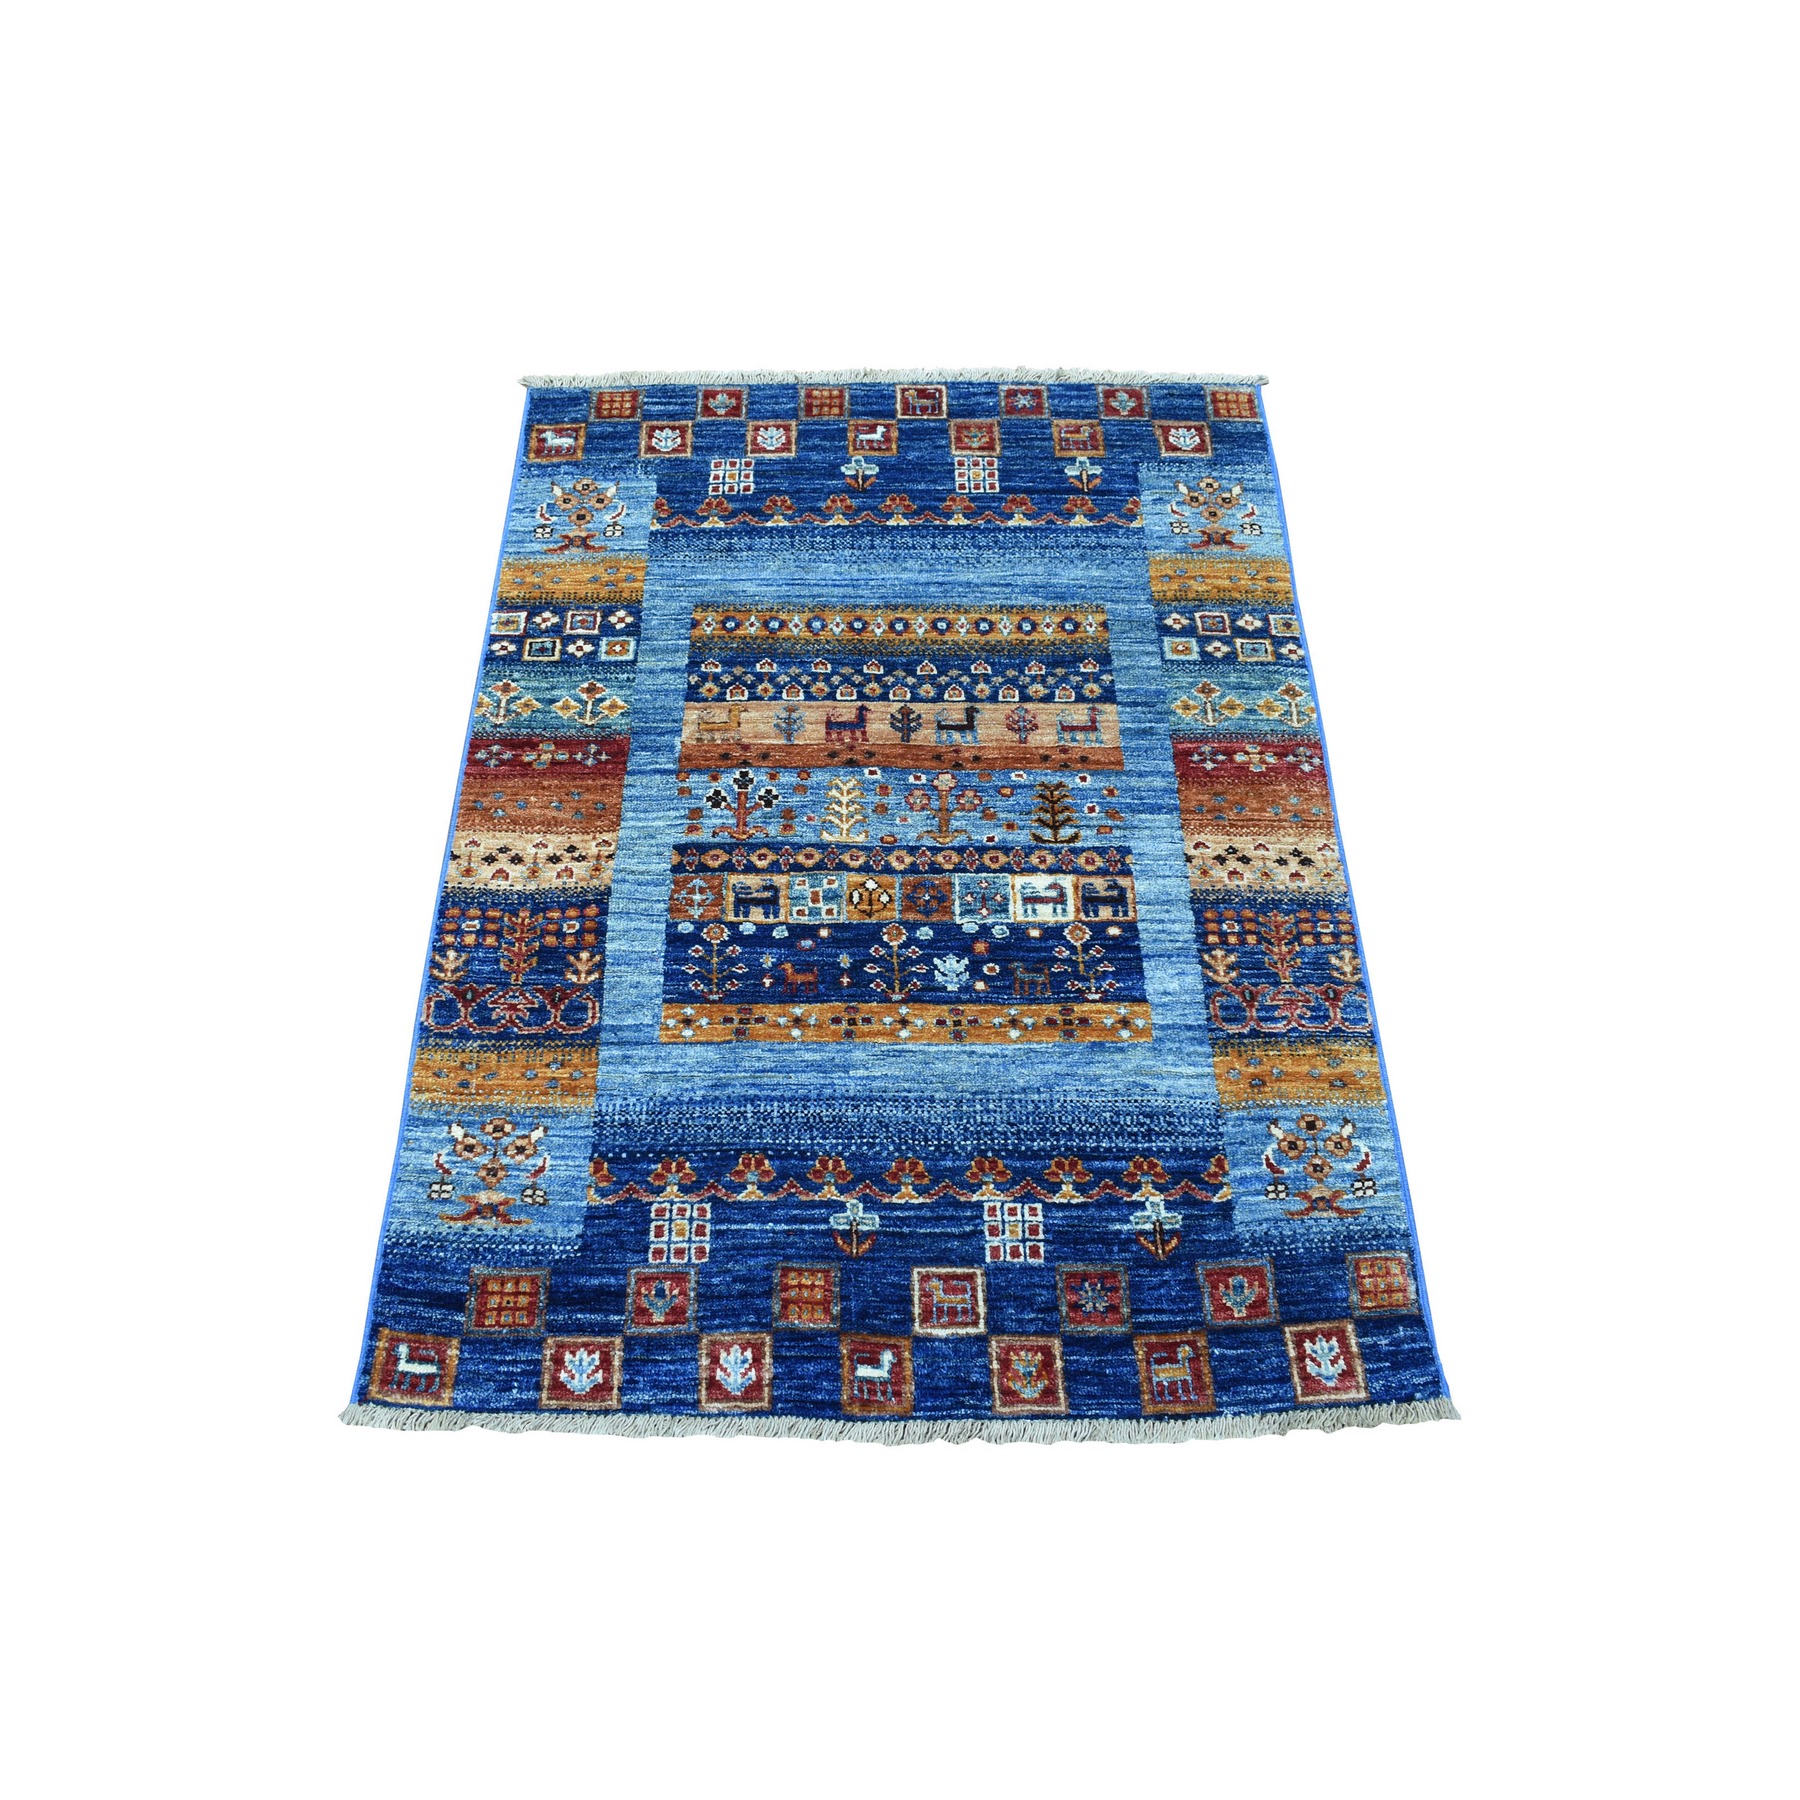 2'9"x3'10" Hand Woven Glimmery Wool Kashkuli Gabbeh Light Blue In A Colorful Palette Oriental Rug 